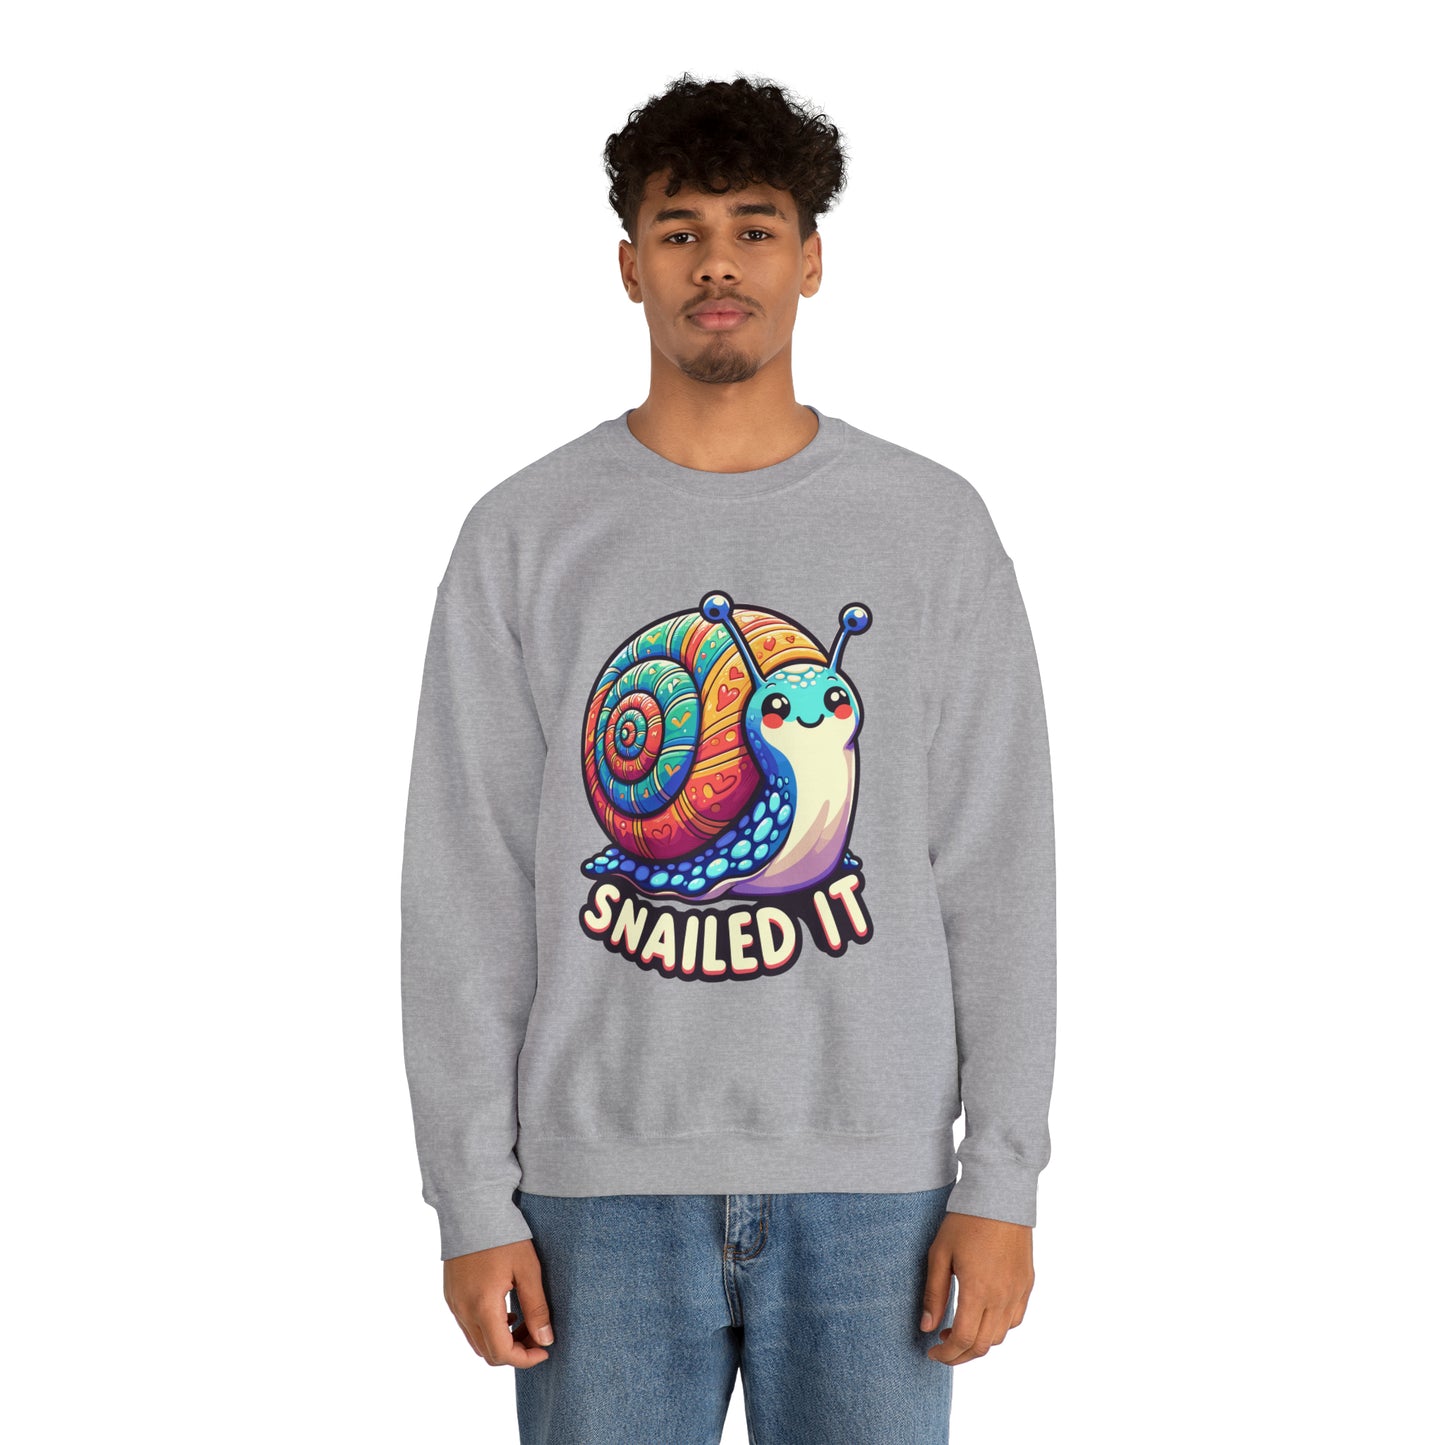 Snailed It Crewneck Sweatshirt